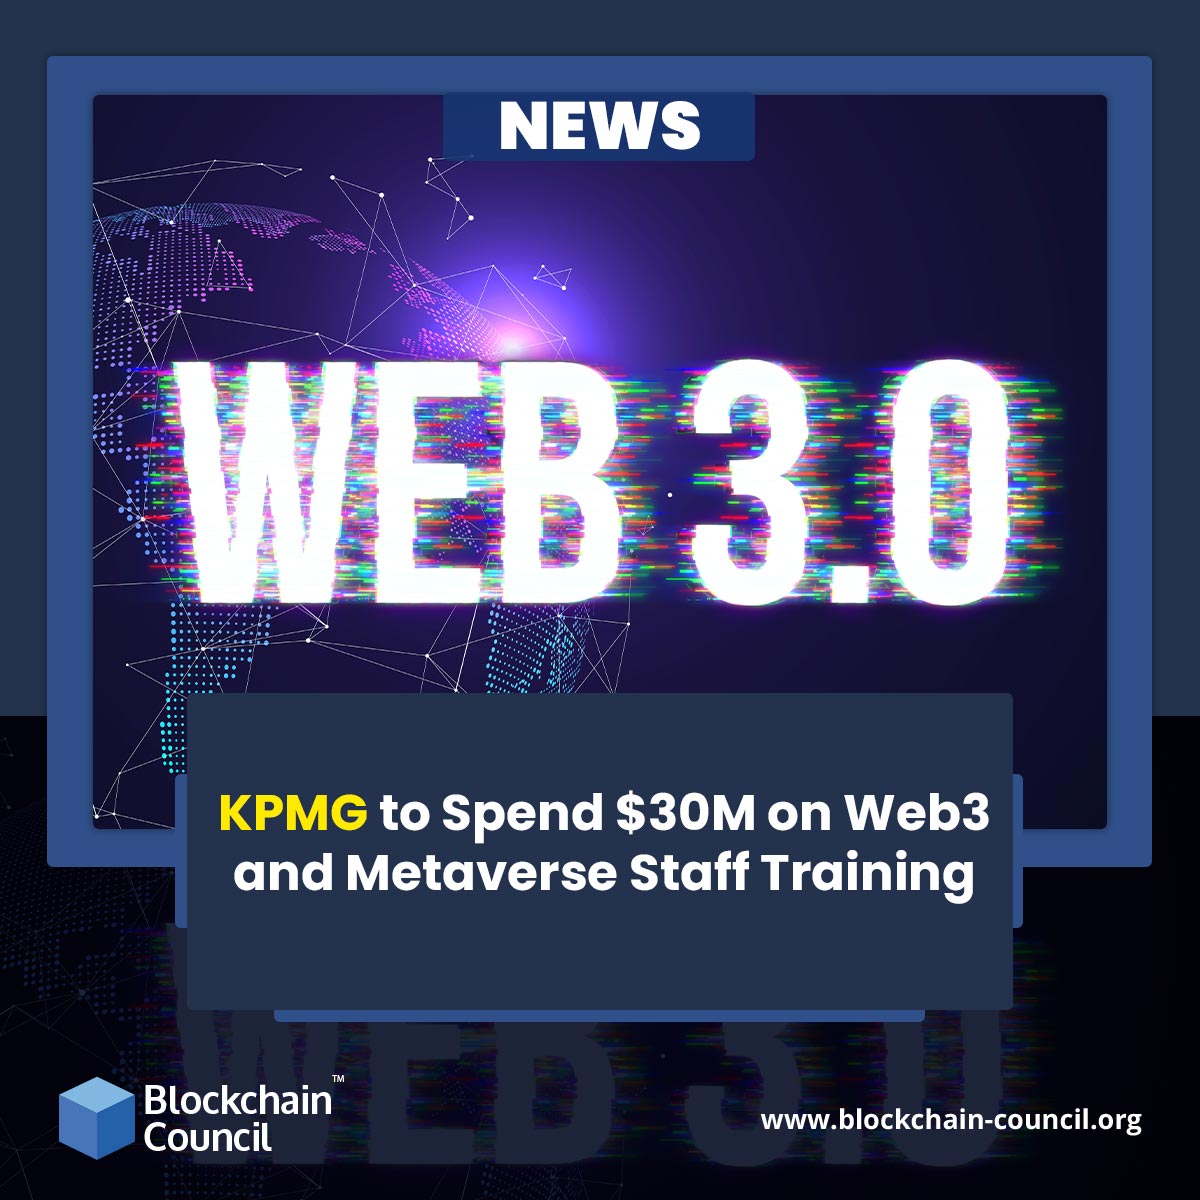 KPMG to Spend $30M on Web3 and Metaverse Staff Training